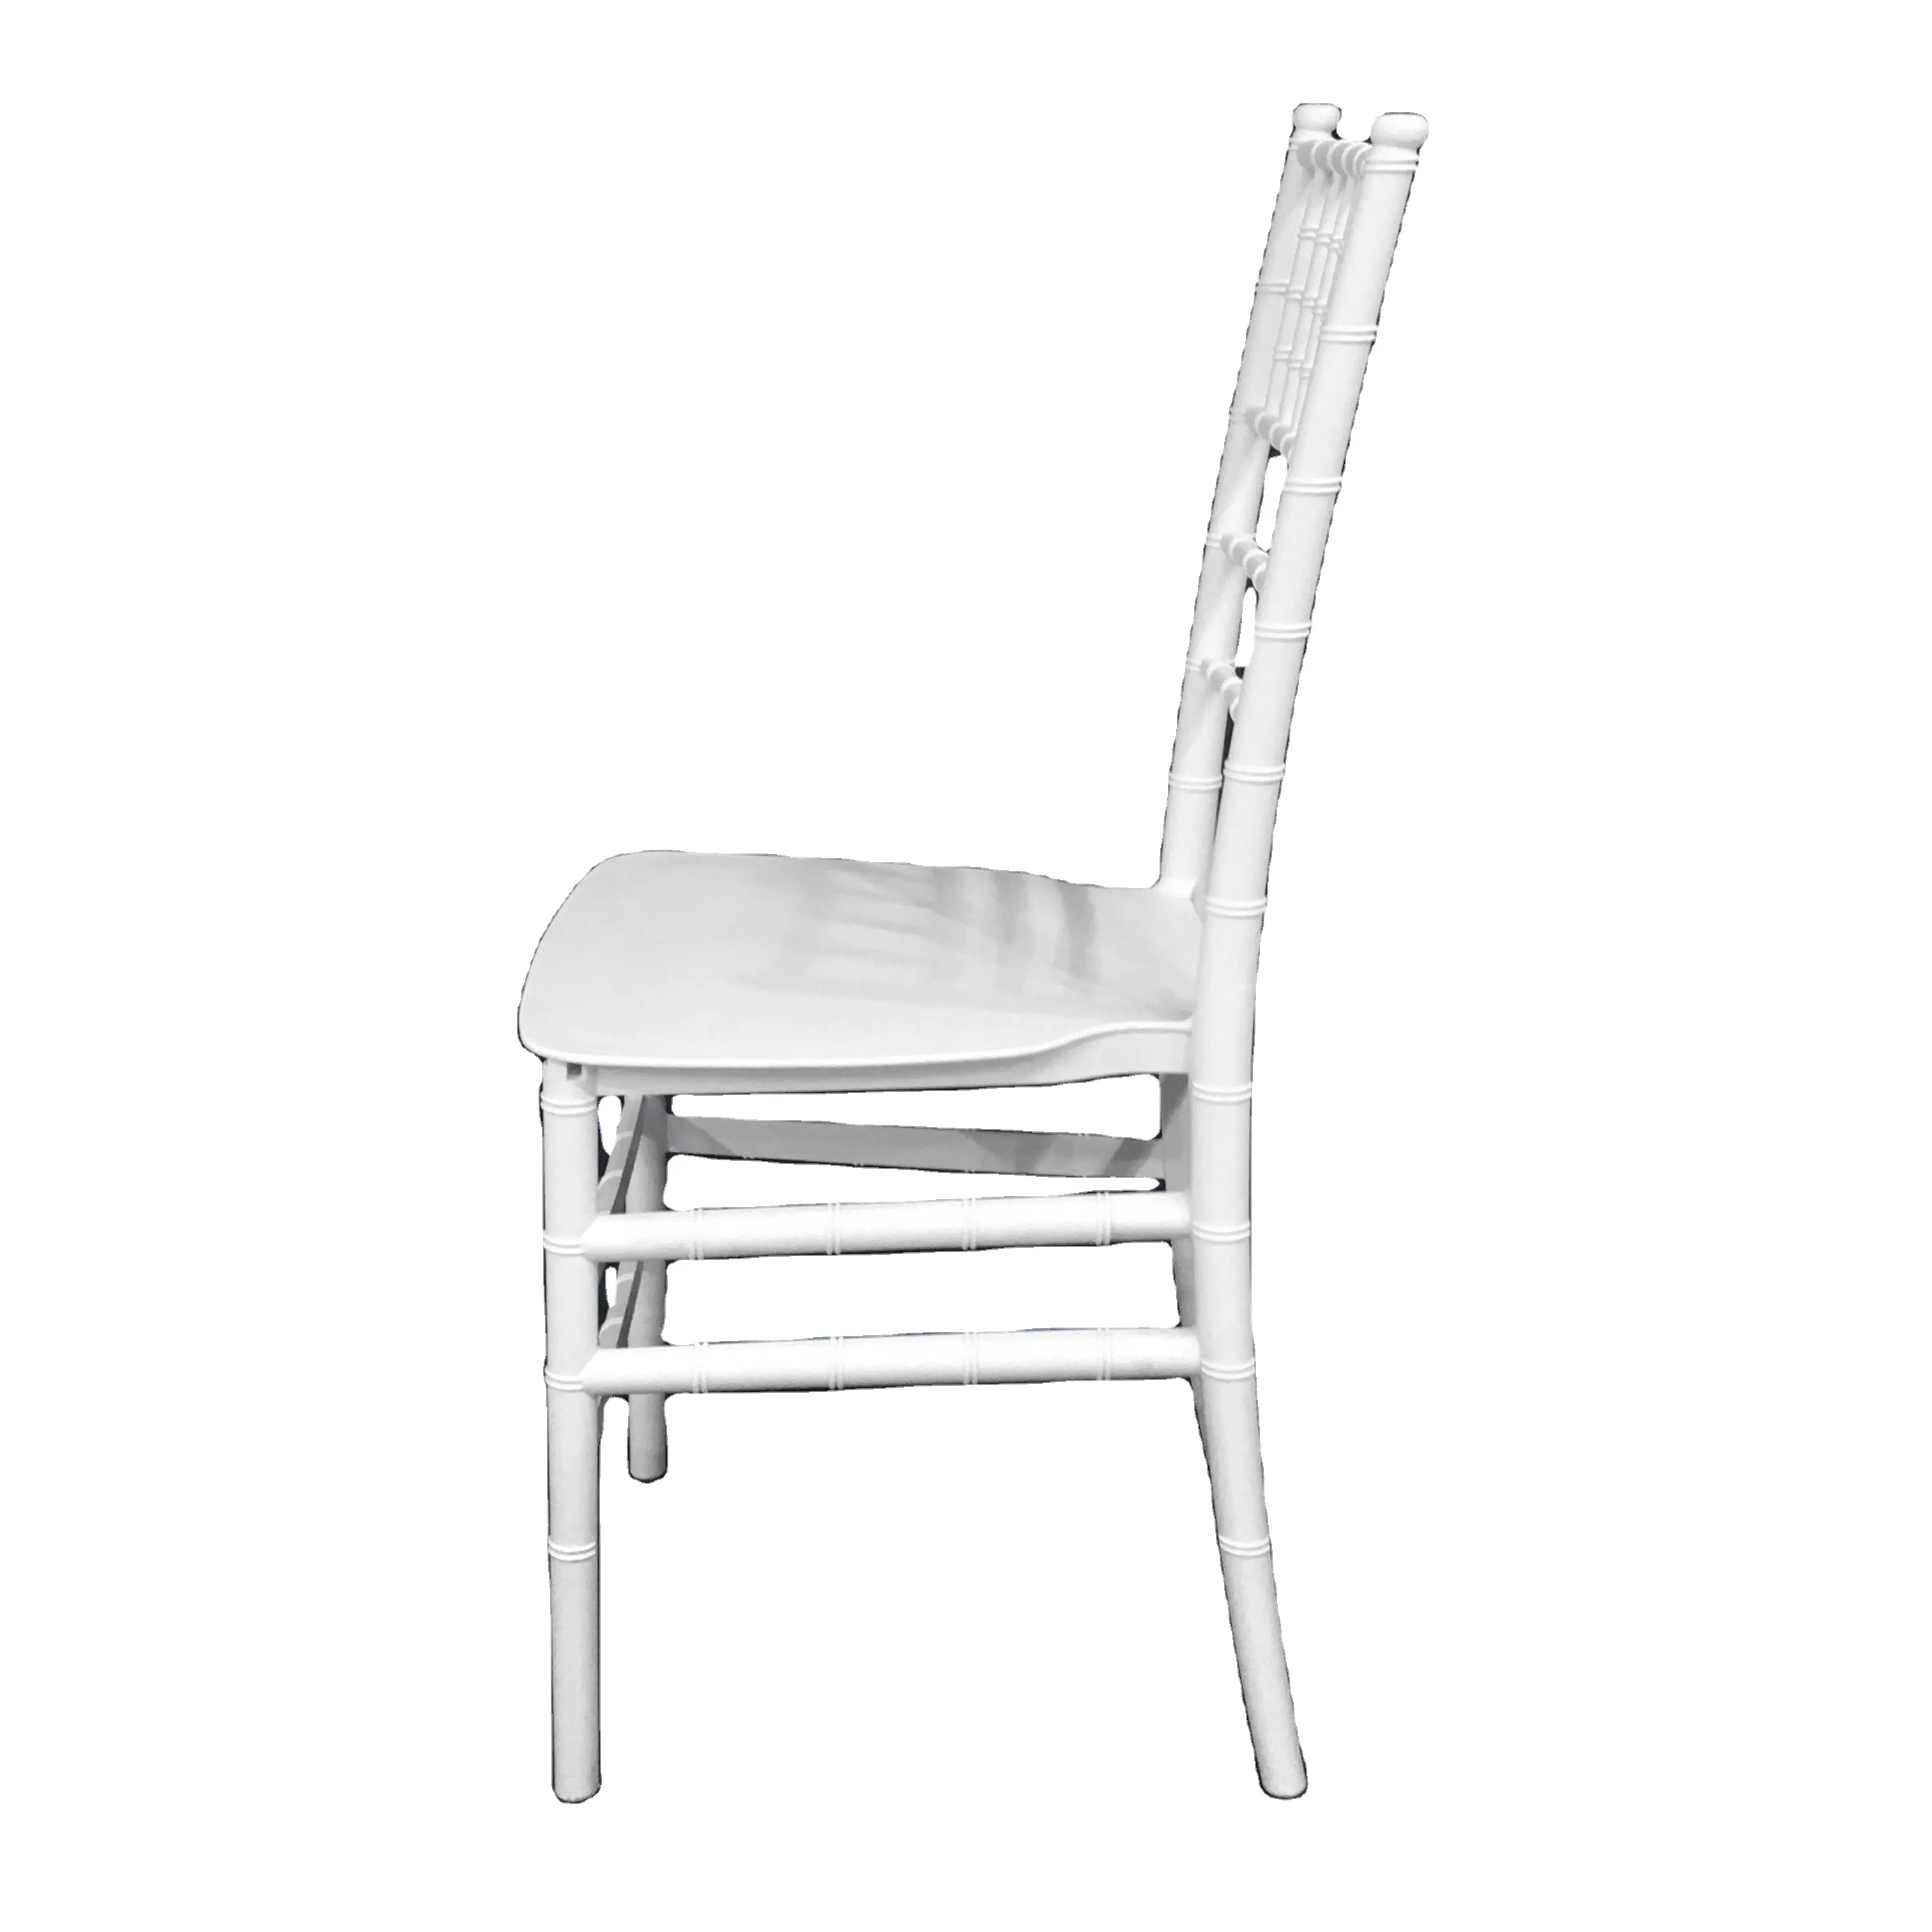 Wholesale rent party clear sillas chivari chair used metal wedding chiavari chairs